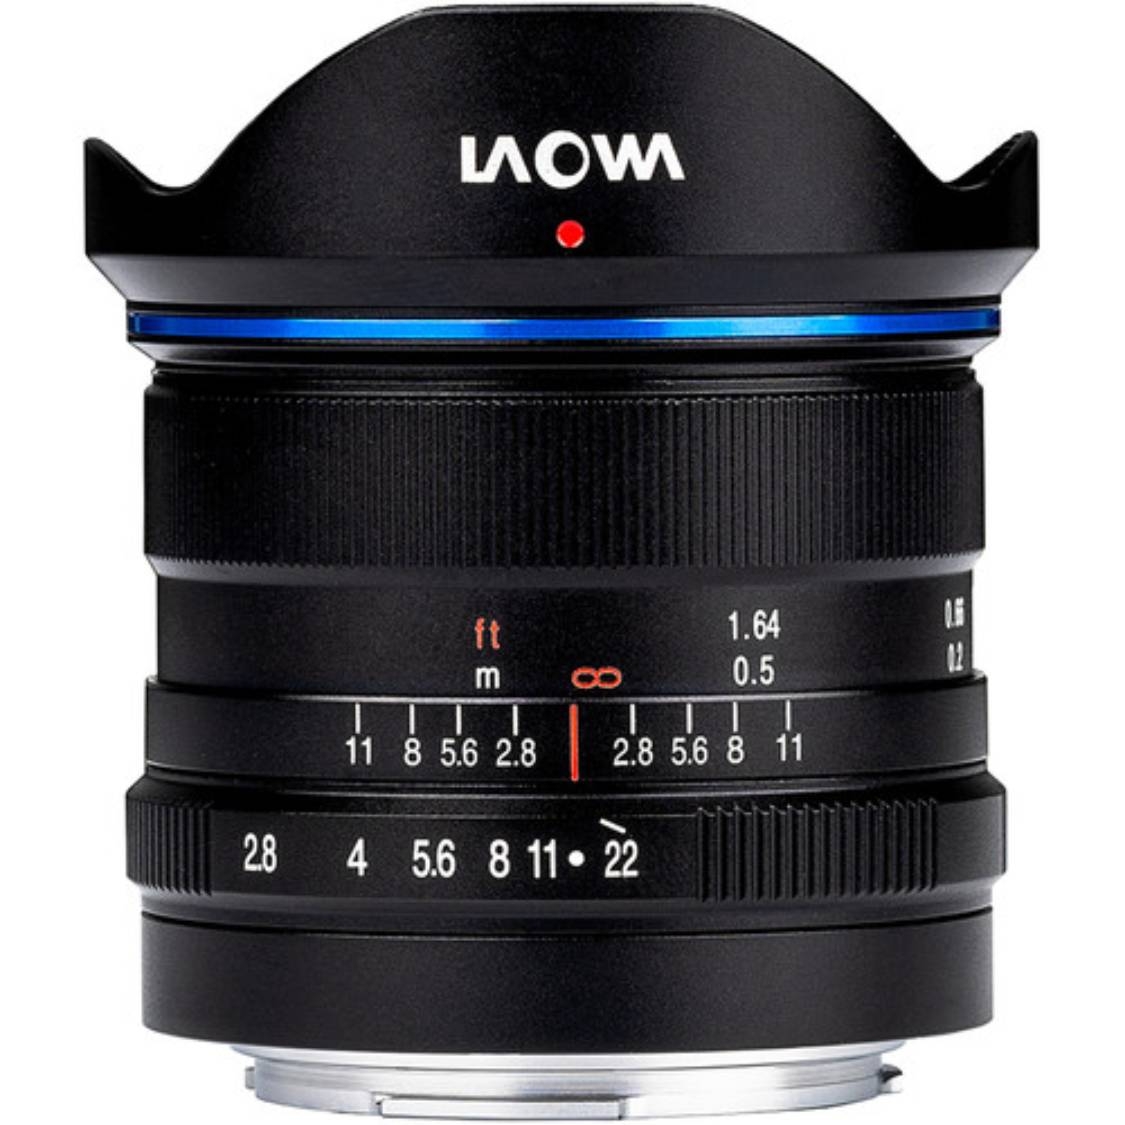 Laowa 9mm f/2.8 Zero-D Lens for Fuji X